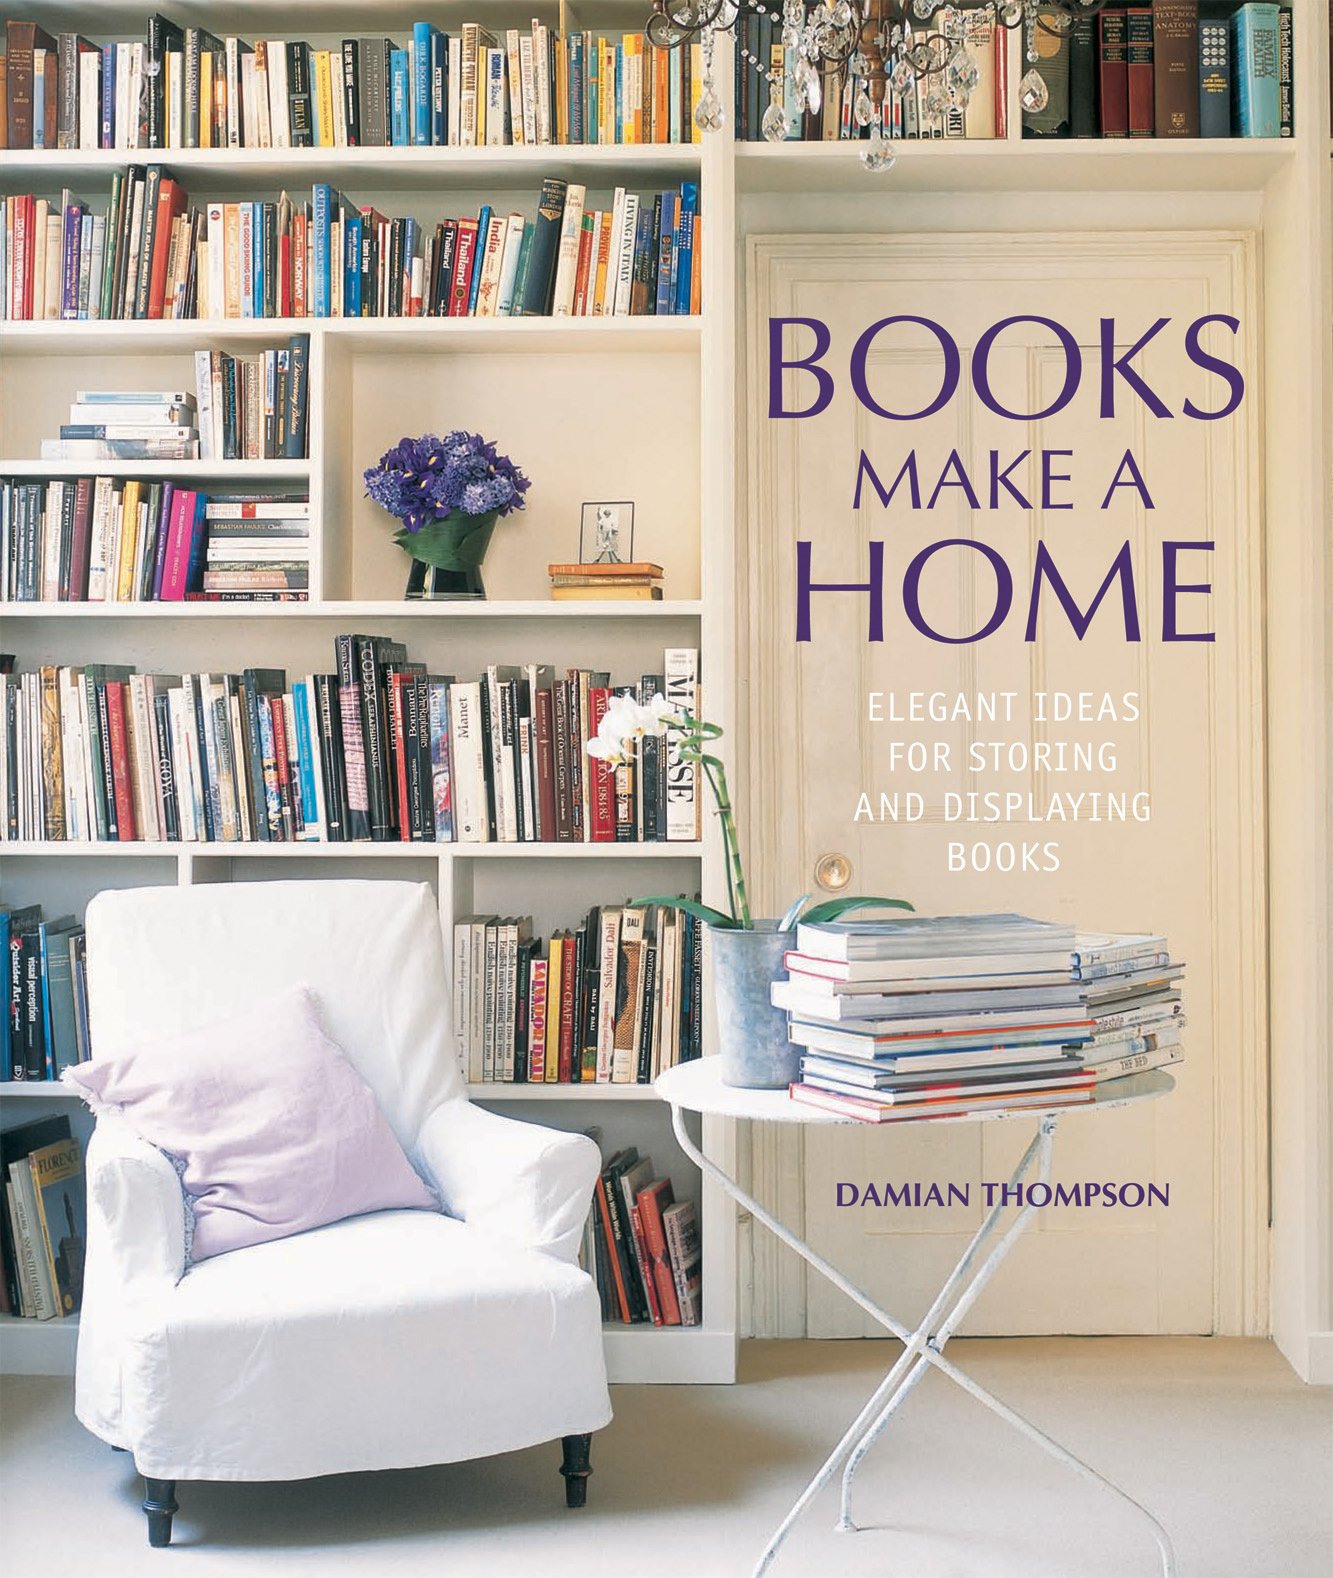 Books Make a Home - Damian Thompson